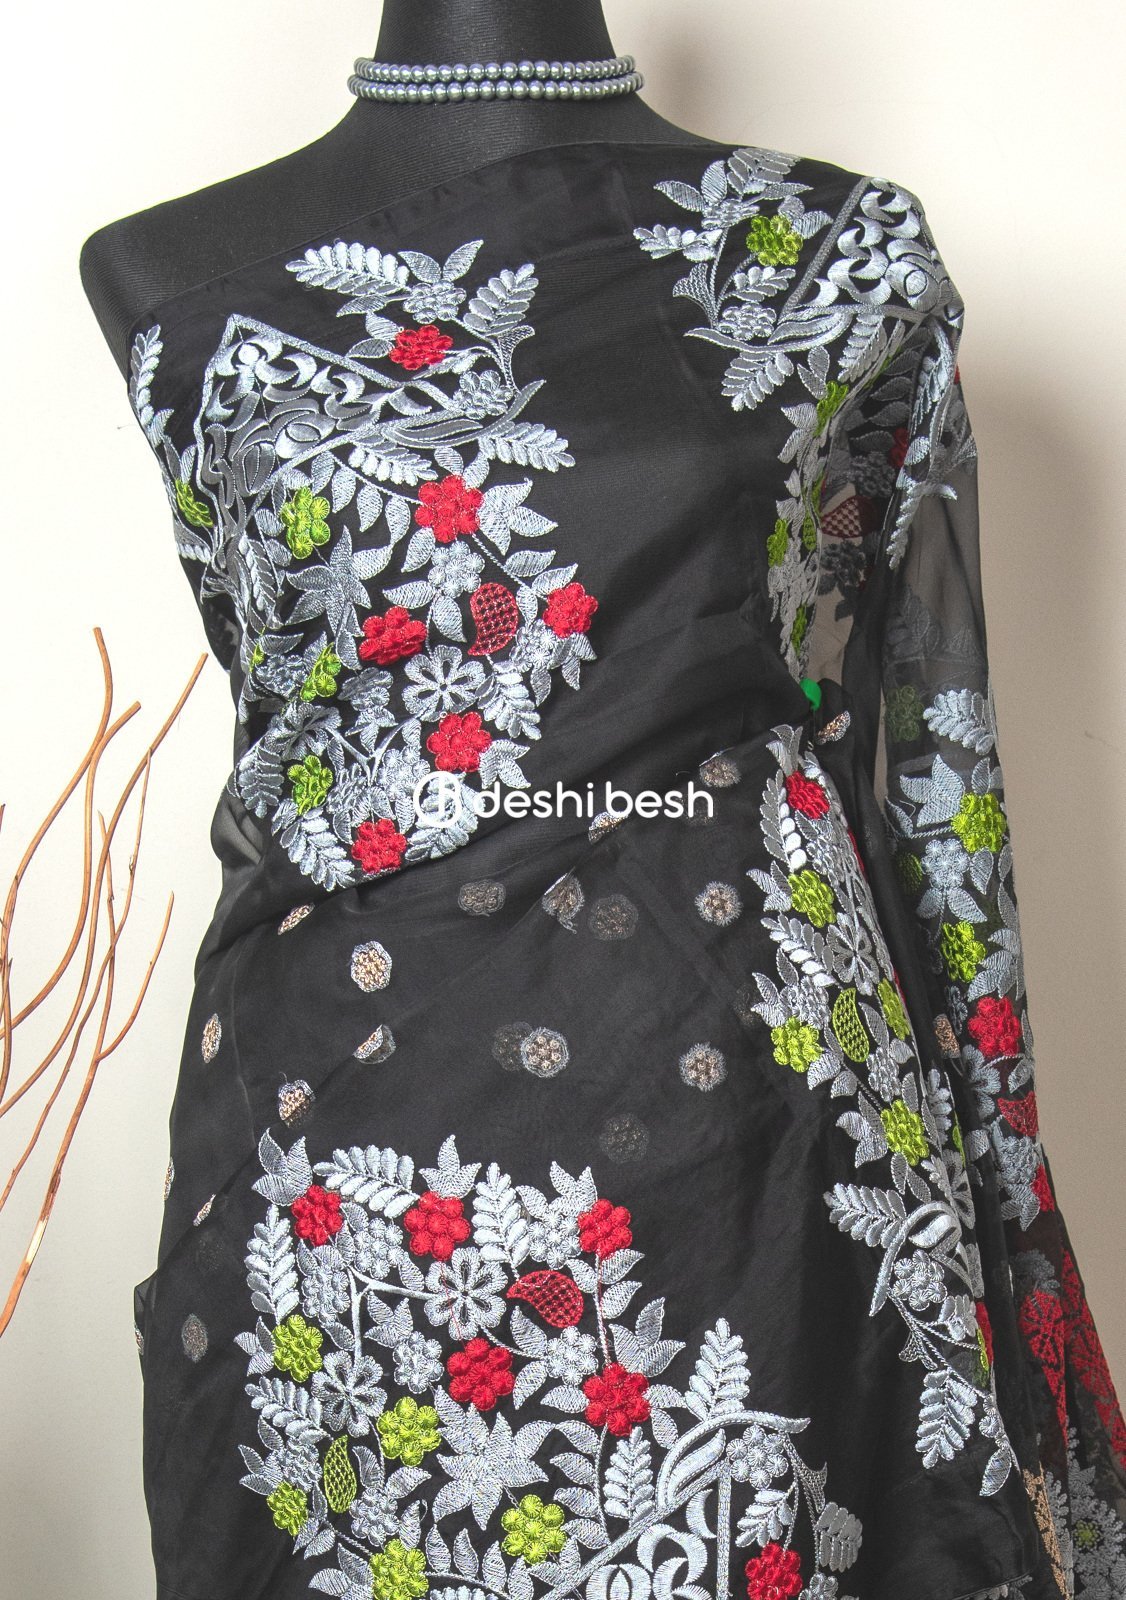 Exclusive Boutique Designer Muslin Saree: Deshi Besh.